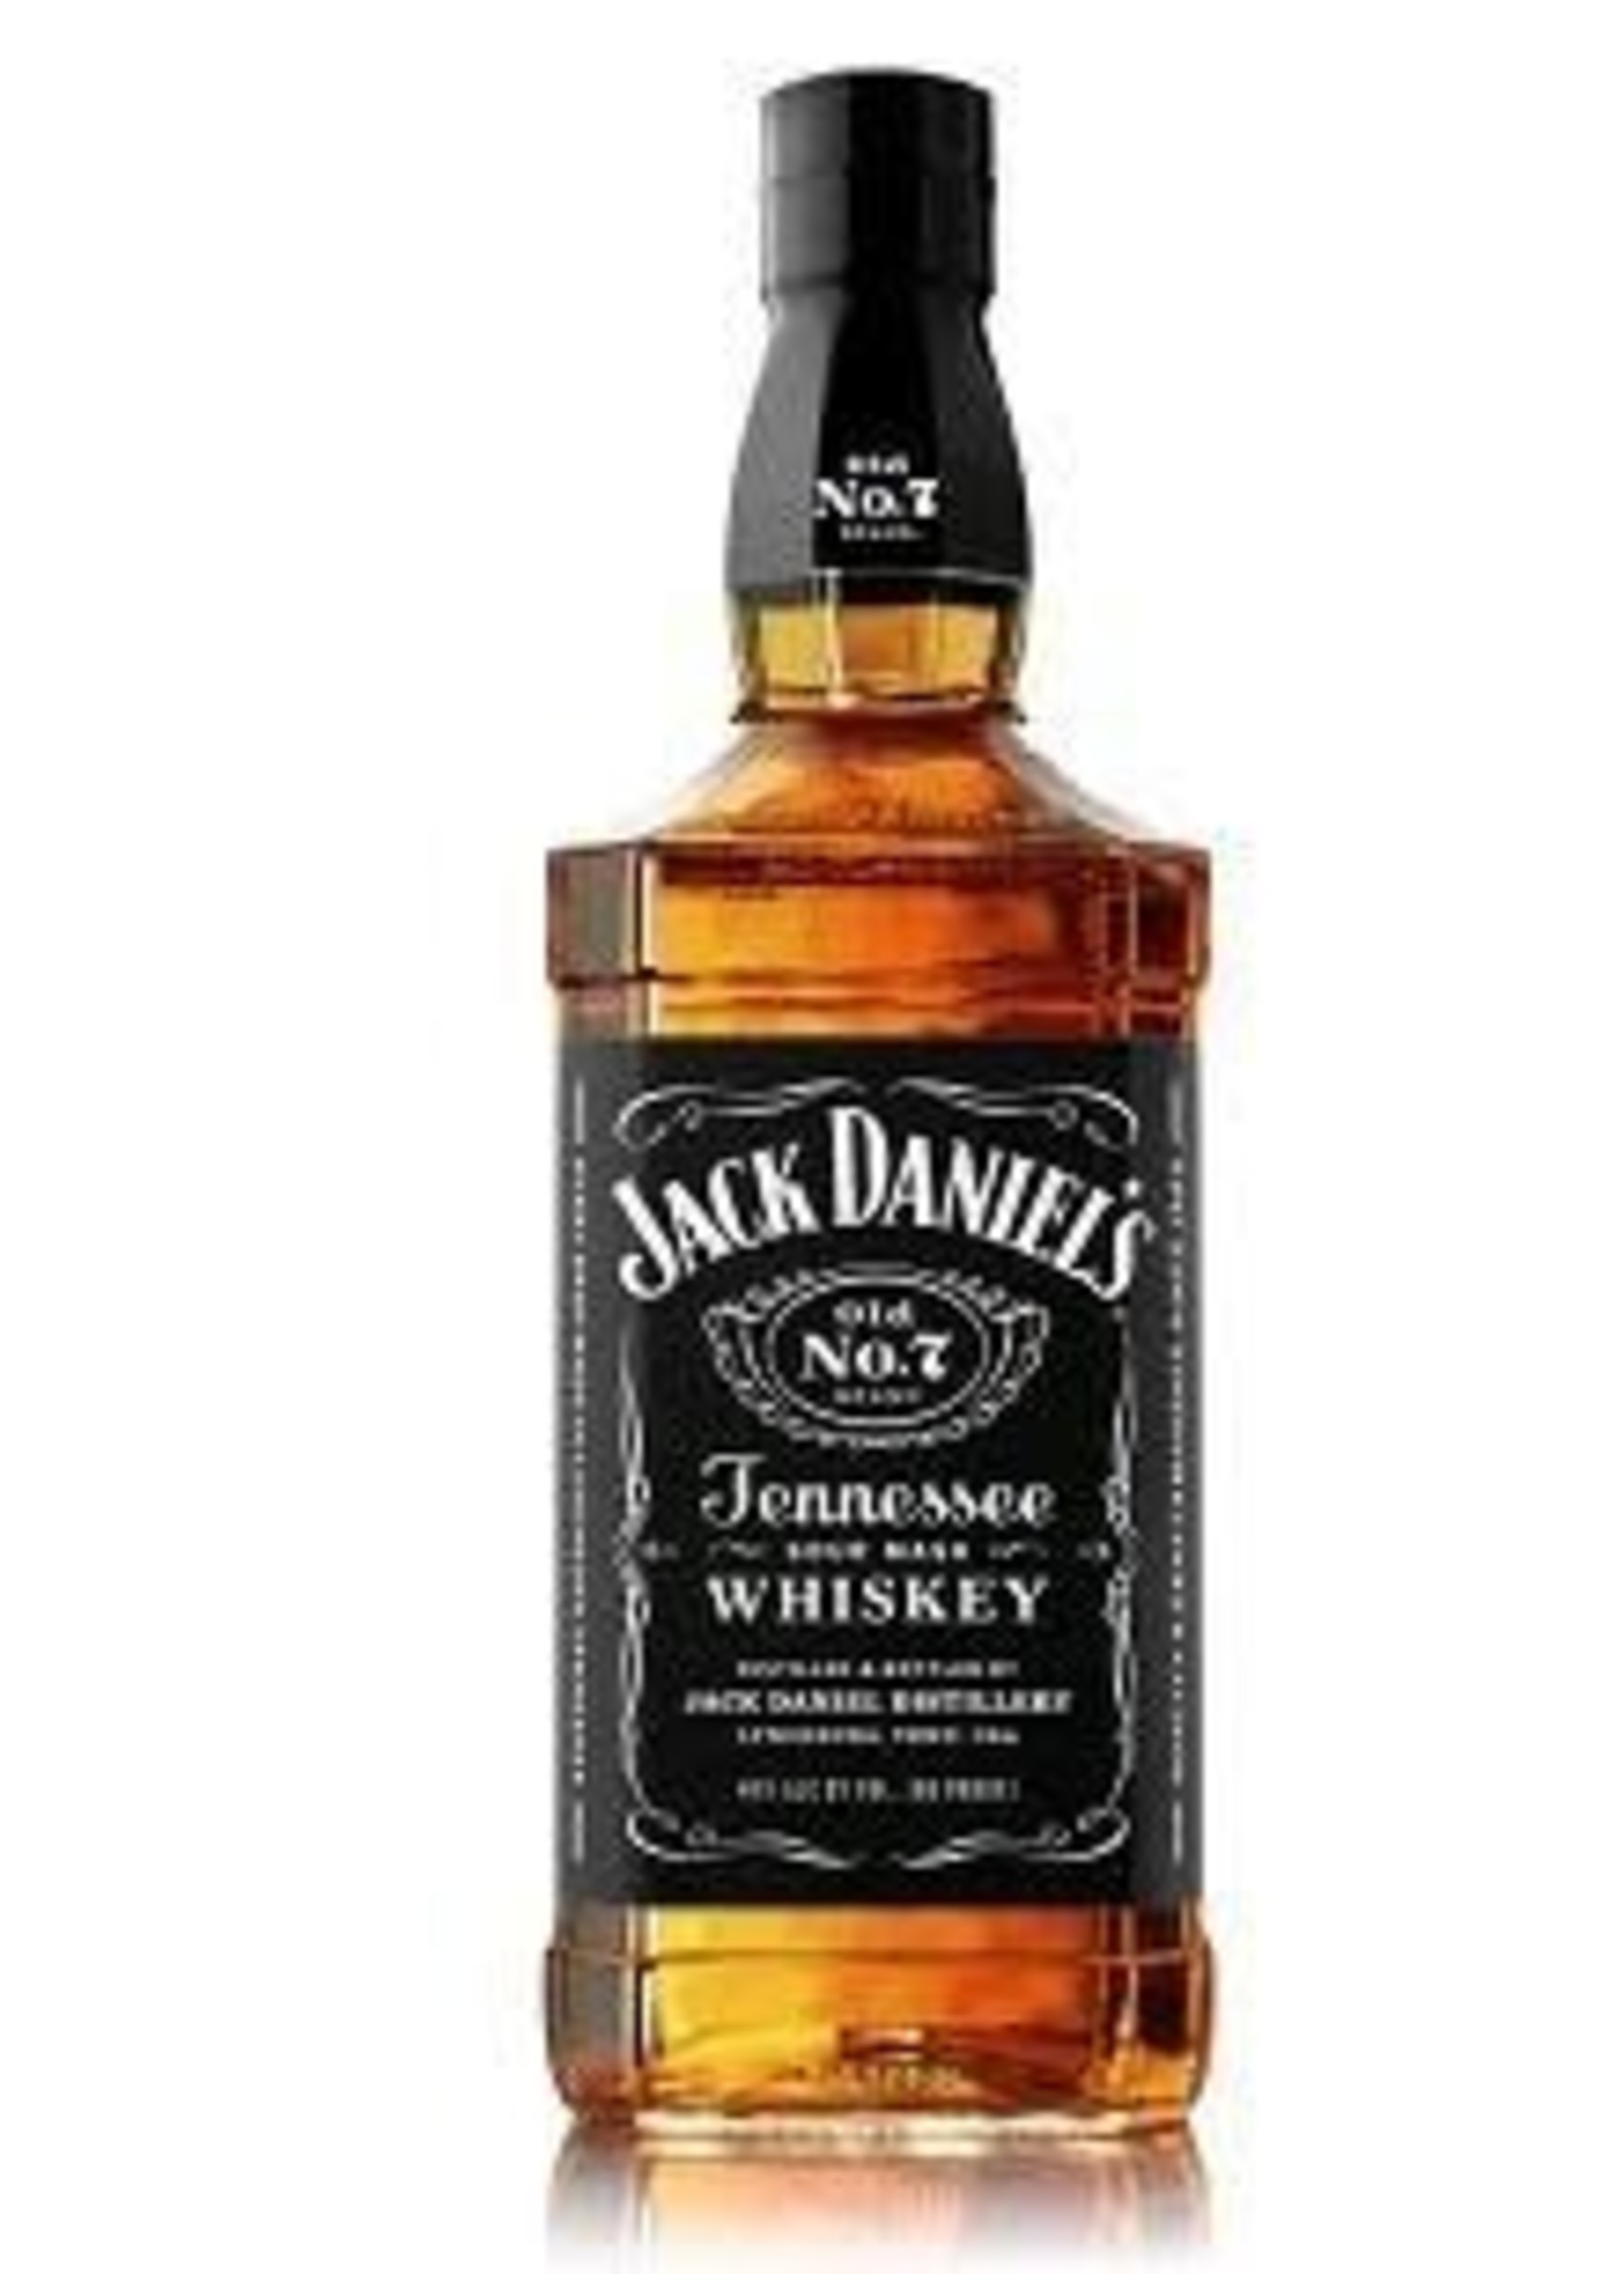 Jack Daniel's Jack Daniel's / Tennessee Whiskey